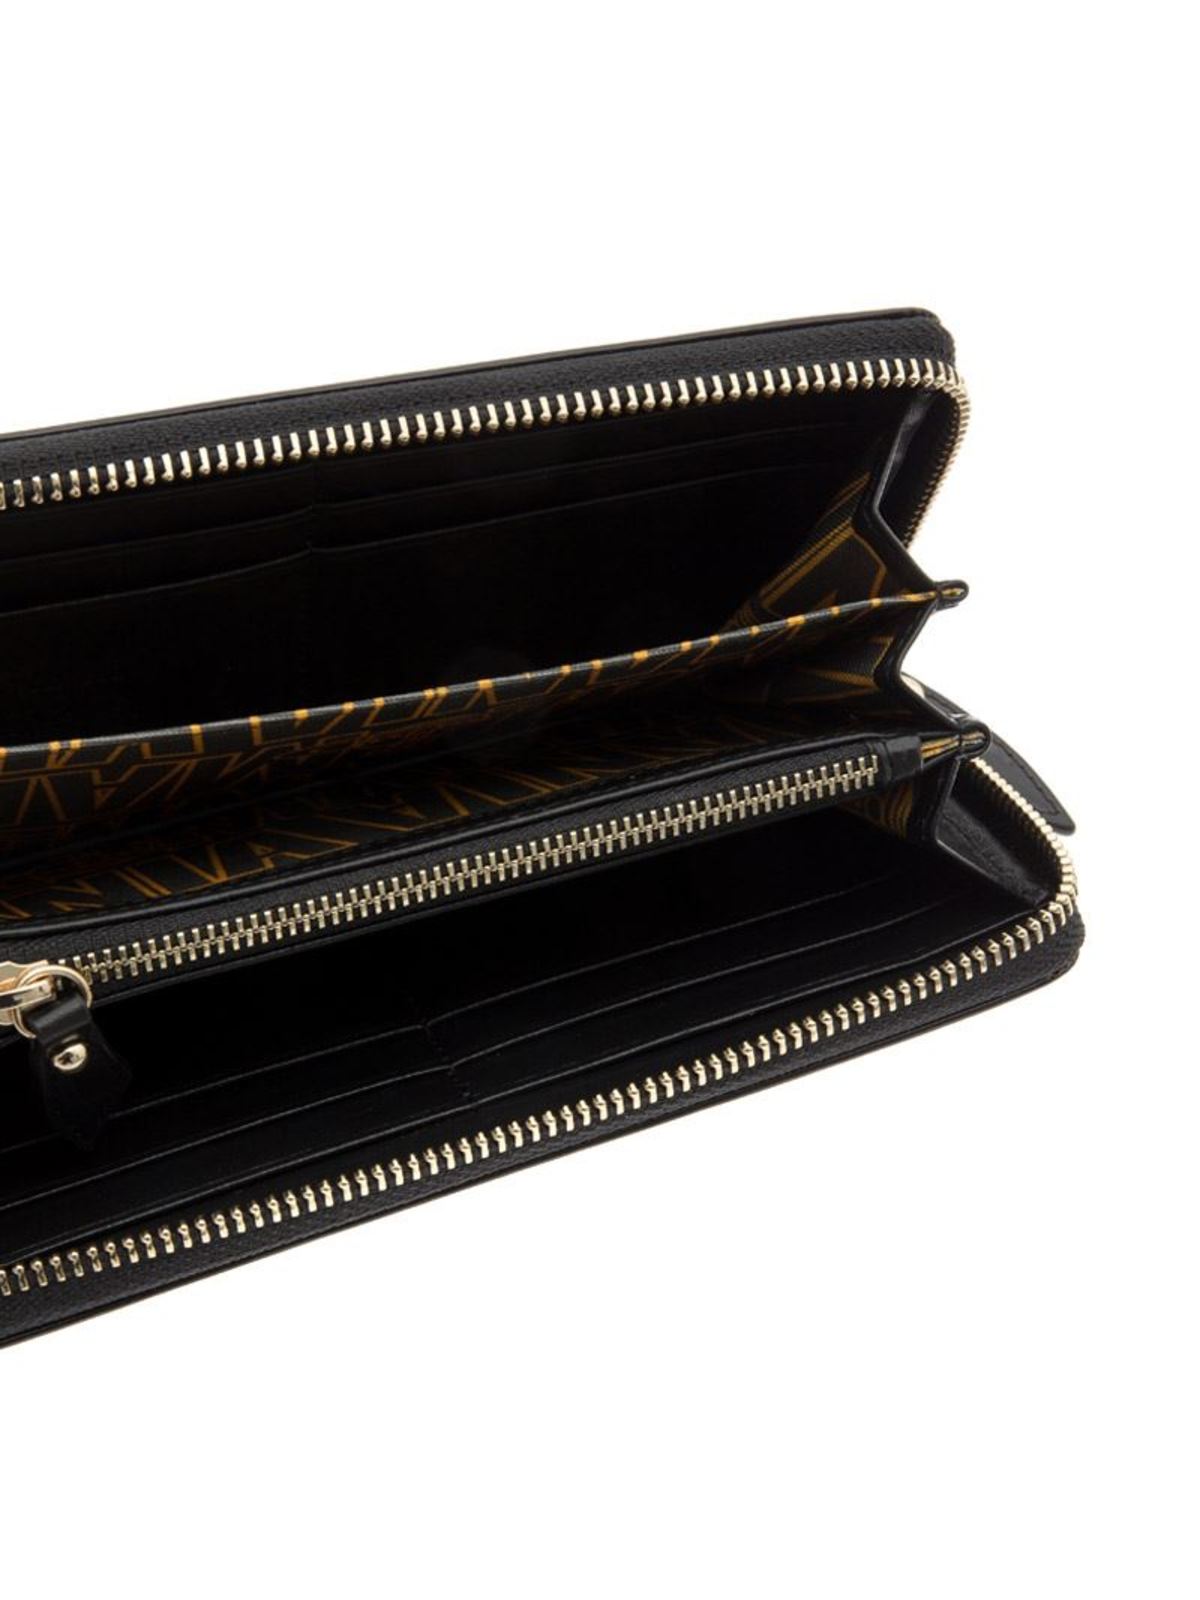 Vivienne Westwood Black Embossed Wallet for Men